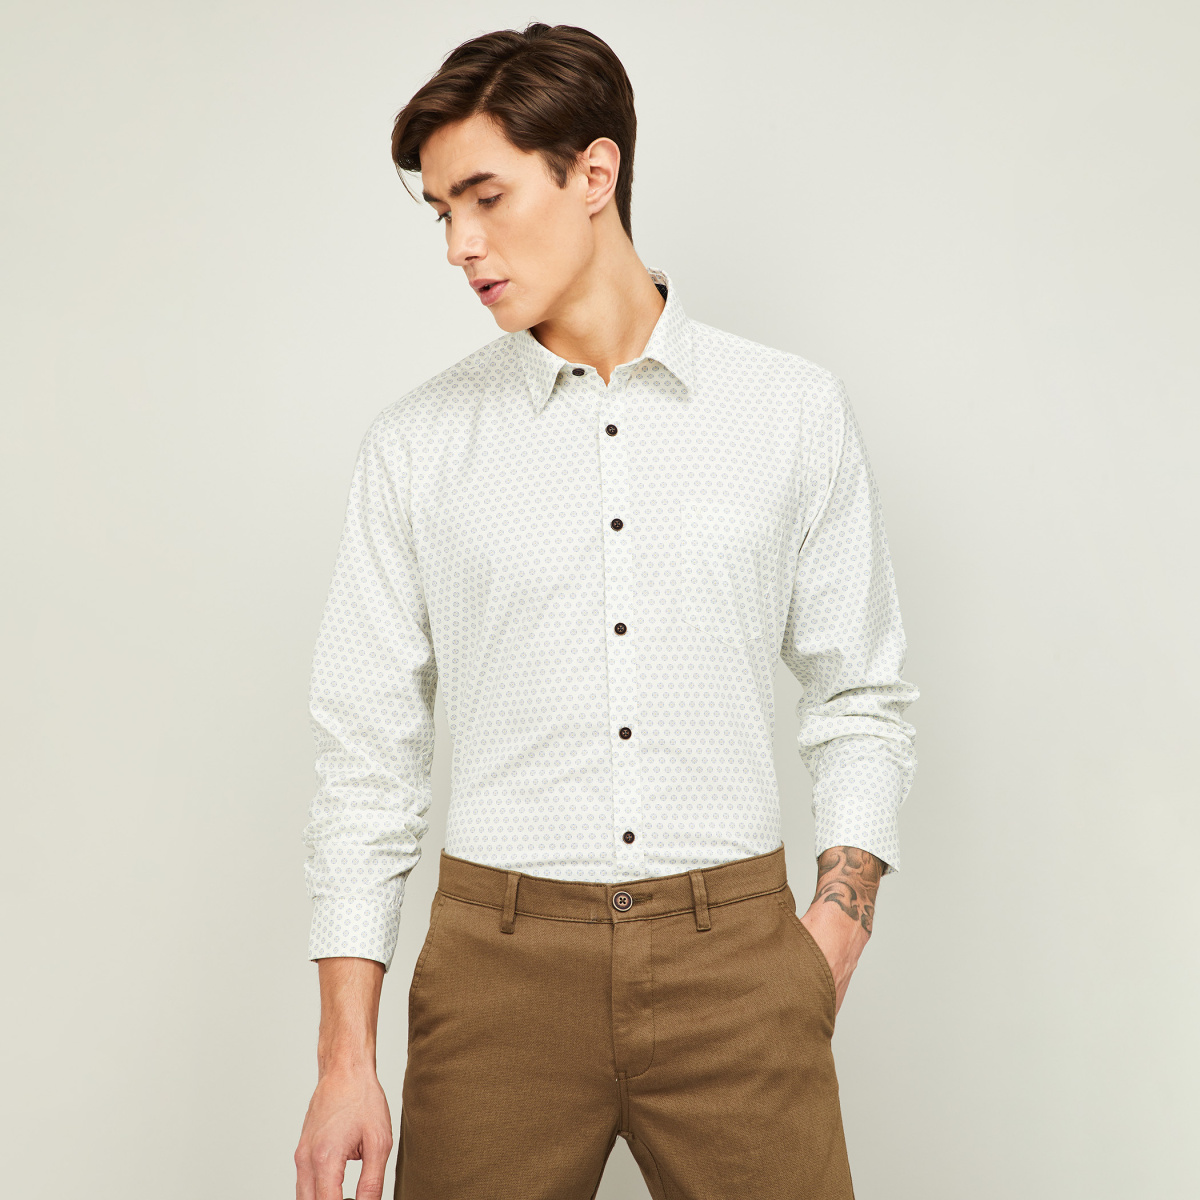 VH SPORTS Men Printed Full Sleeves Slim Fit Casual Shirt